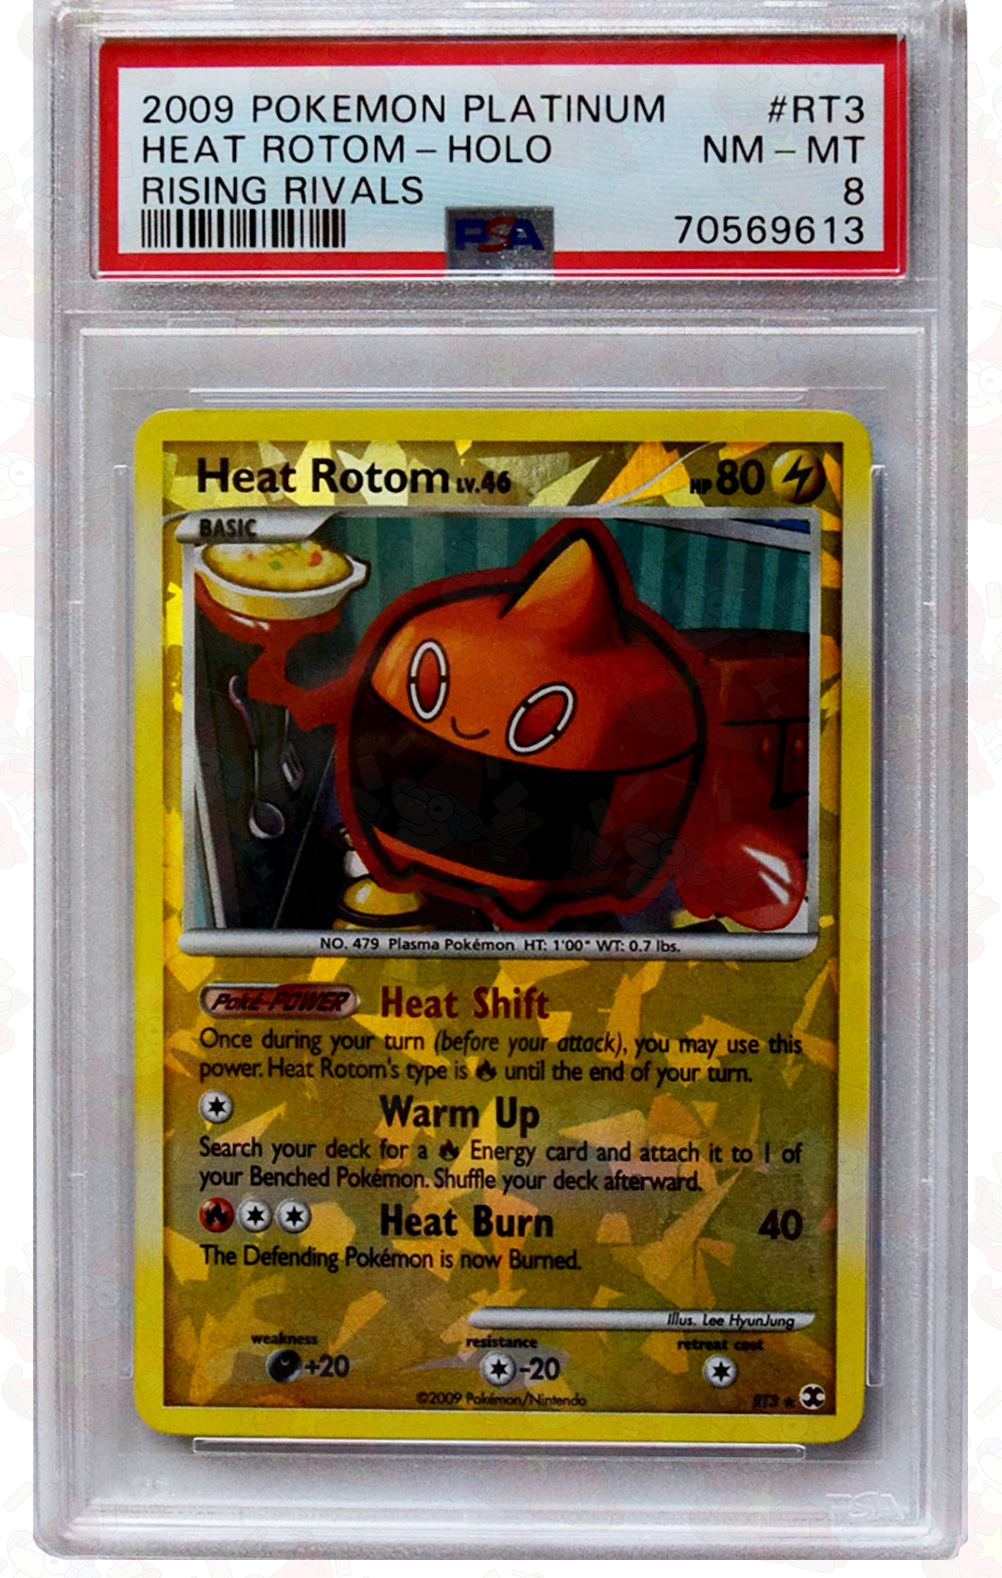 2009 Pokemon Platinum - Heat Rotom (#RT3) - Holo - Rising Rivals - PSA 8 NM - MT